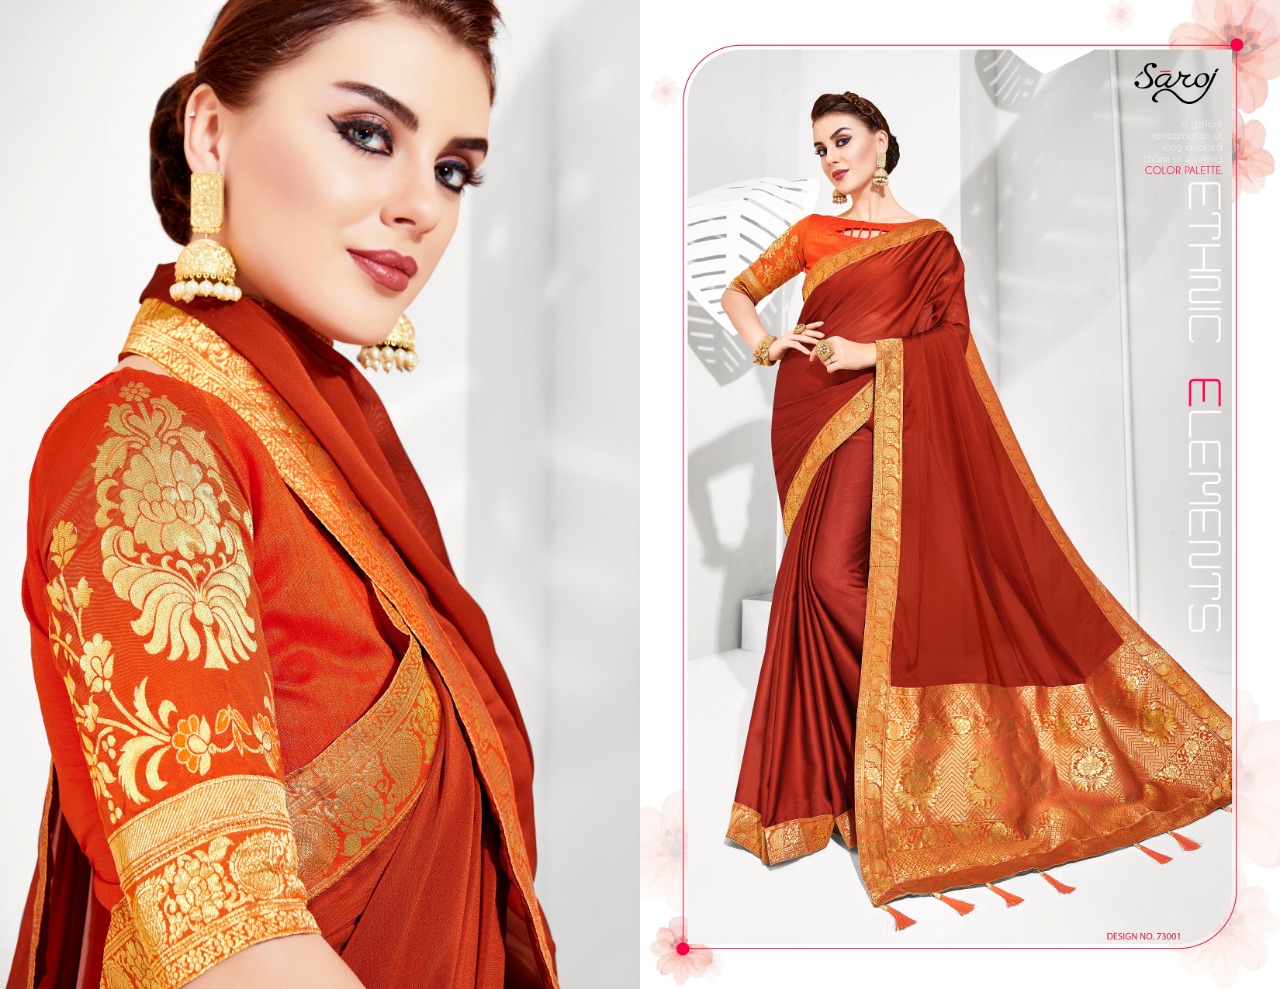 saroj abhushan colorful wear sarees catalog at reasonable rate